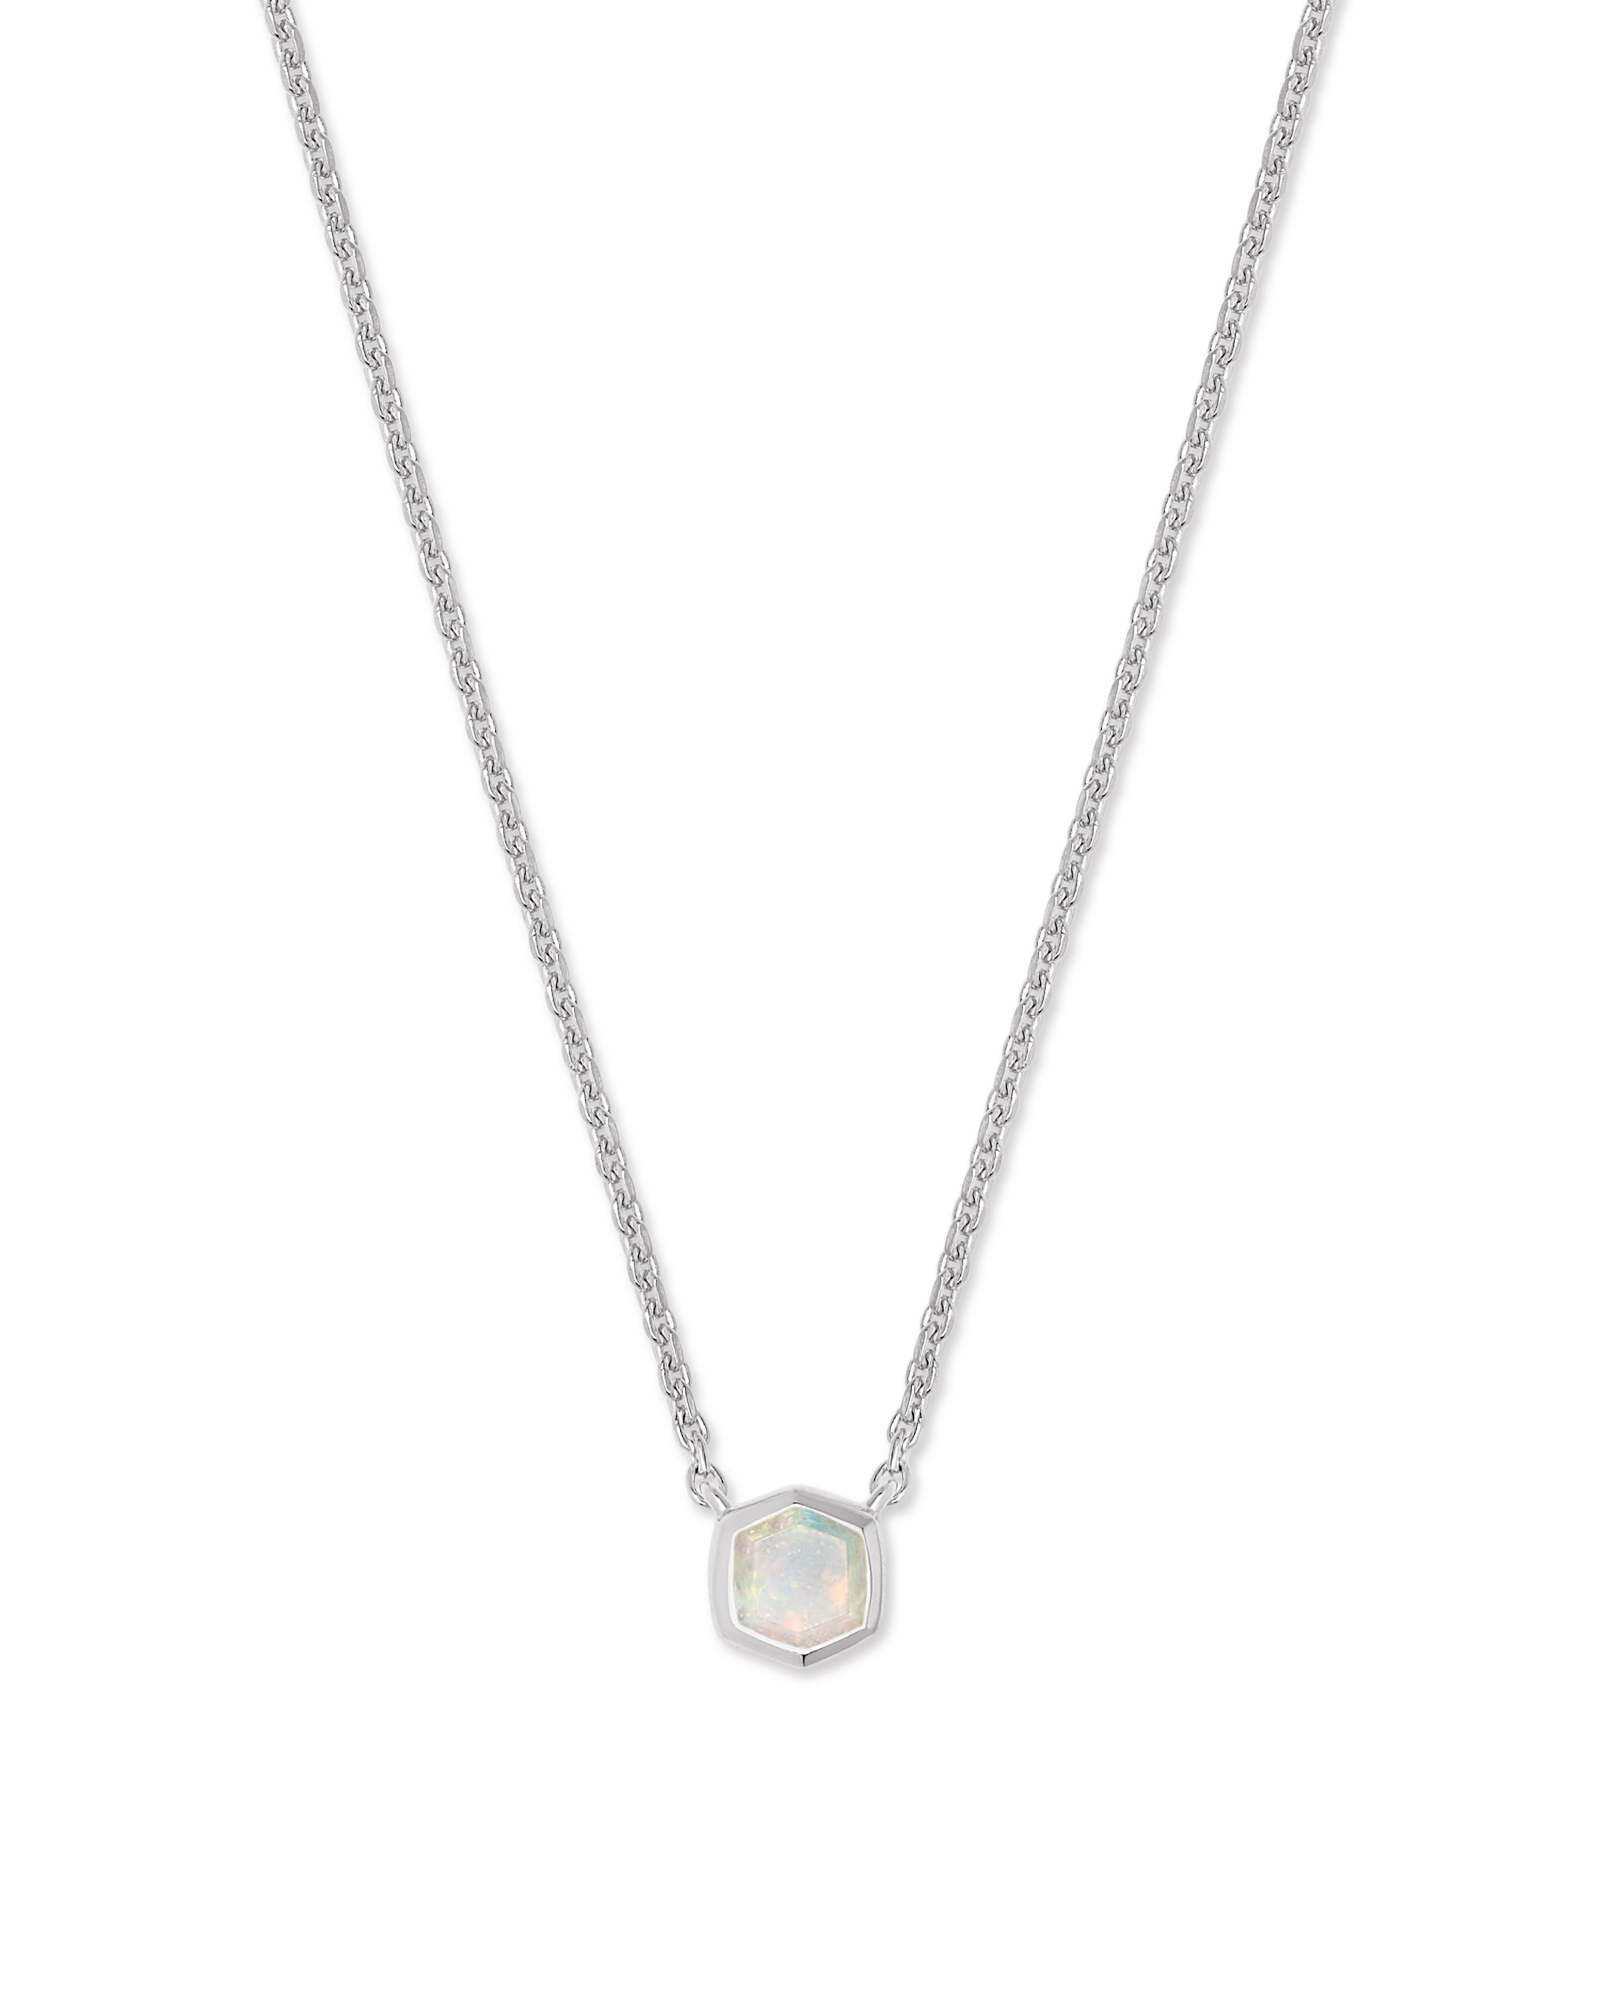 Davie Sterling Silver Pendant Necklace in White Opal | Kendra Scott